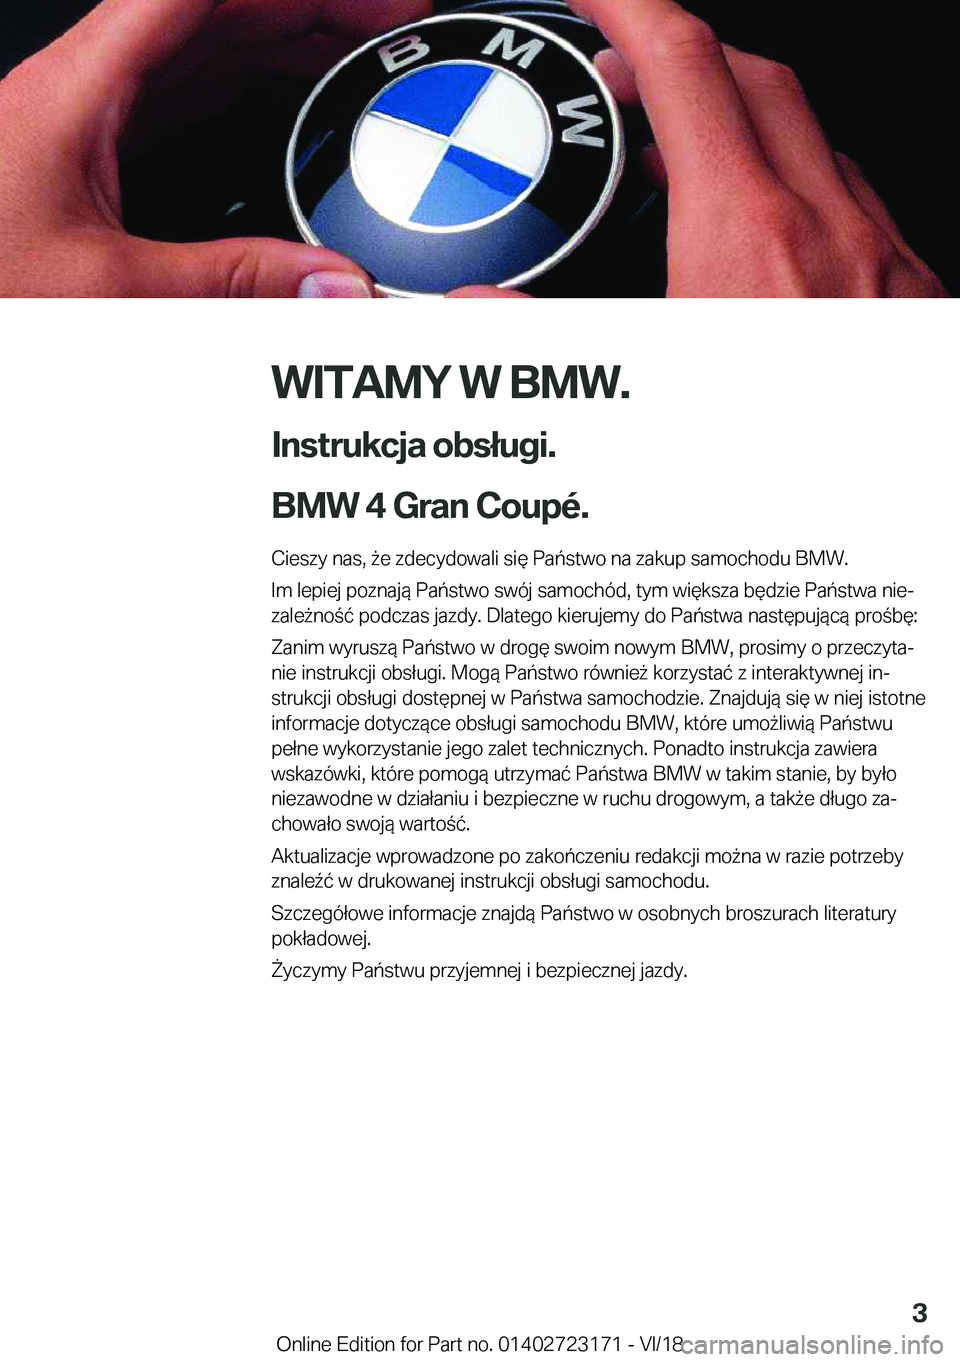 BMW 4 SERIES GRAN COUPE 2019  Instrukcja obsługi (in Polish) �W�I�T�A�M�Y��W��B�M�W�.
�I�n�s�t�r�u�k�c�j�a��o�b�s�ł�u�g�i�.
�B�M�W��4��G�r�a�n��C�o�u�p�